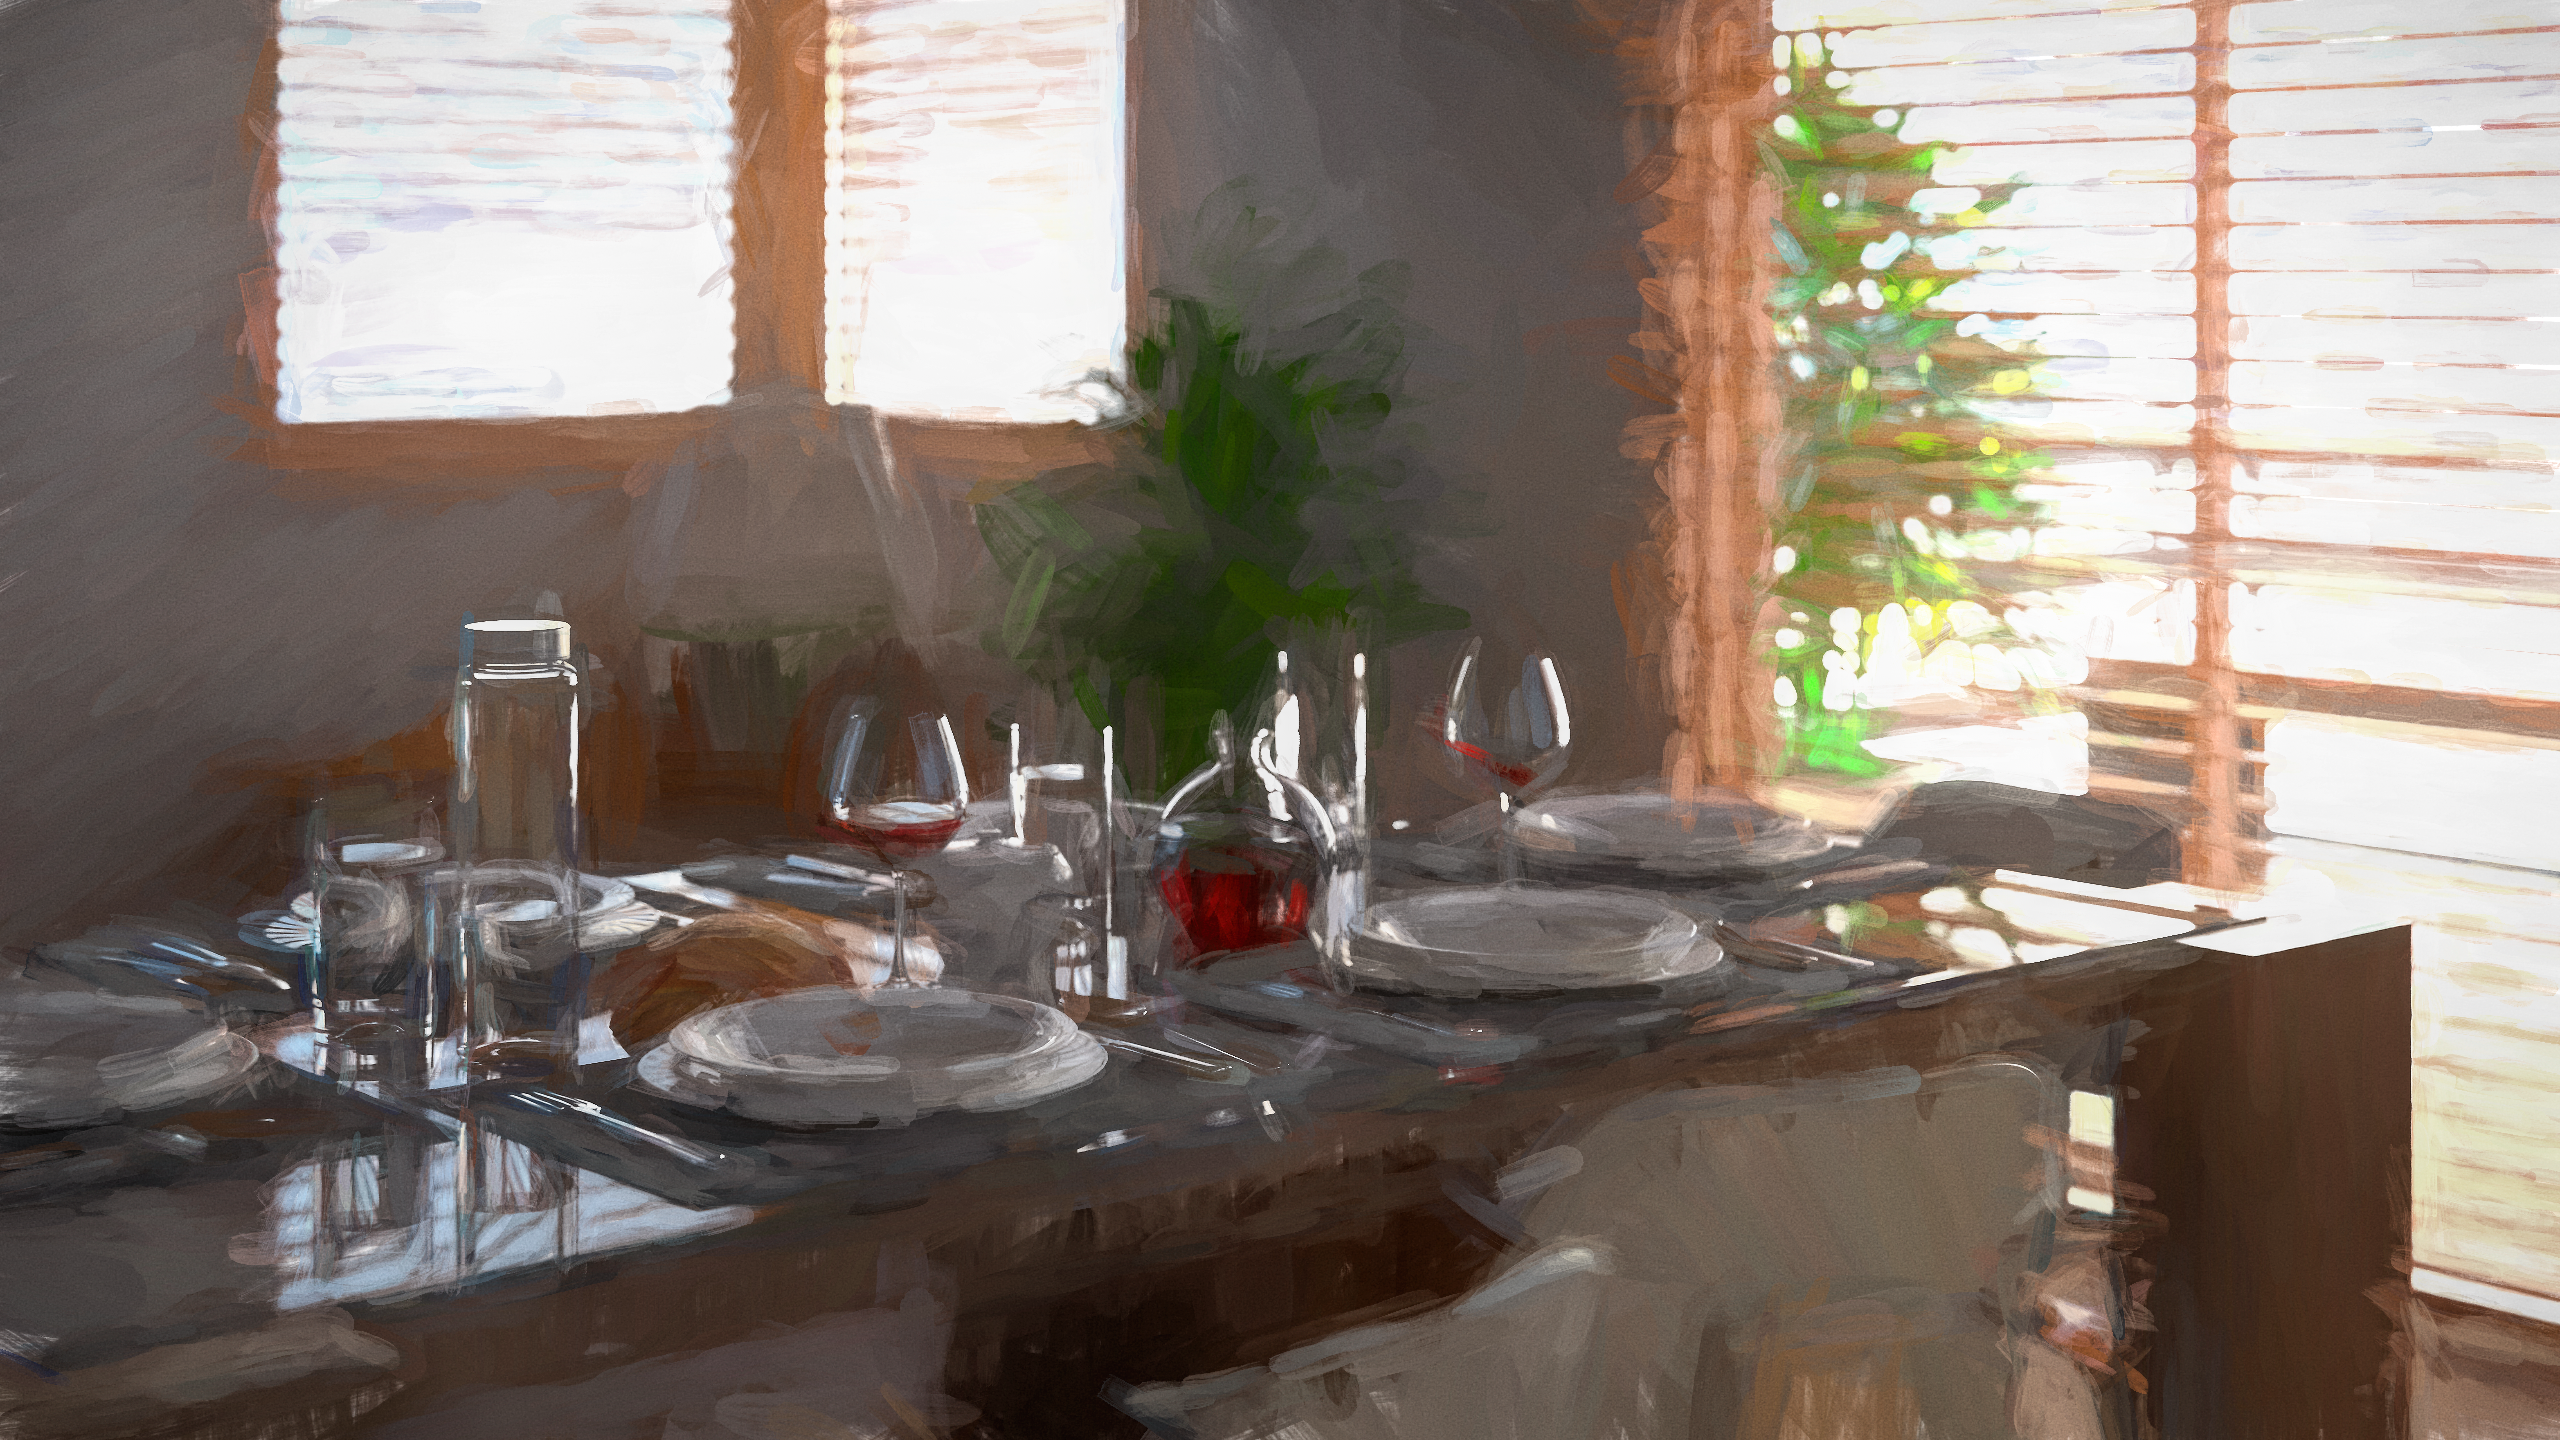 General 2560x1440 CGI digital art Shader oil painting painting table indoors wine drink